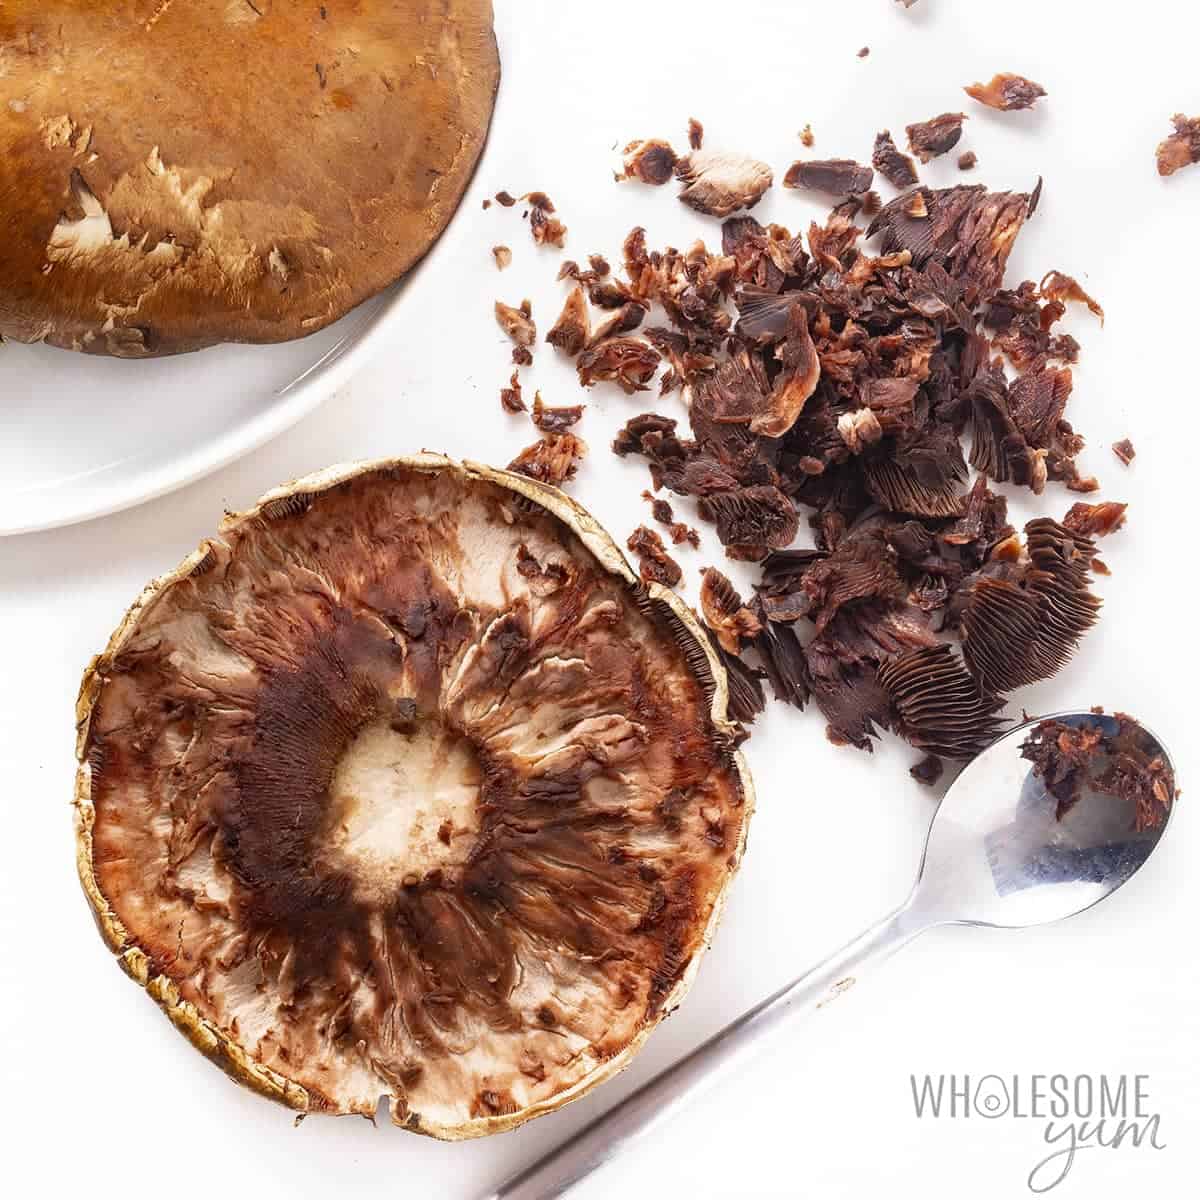 Portobello mushroom with gills removed.